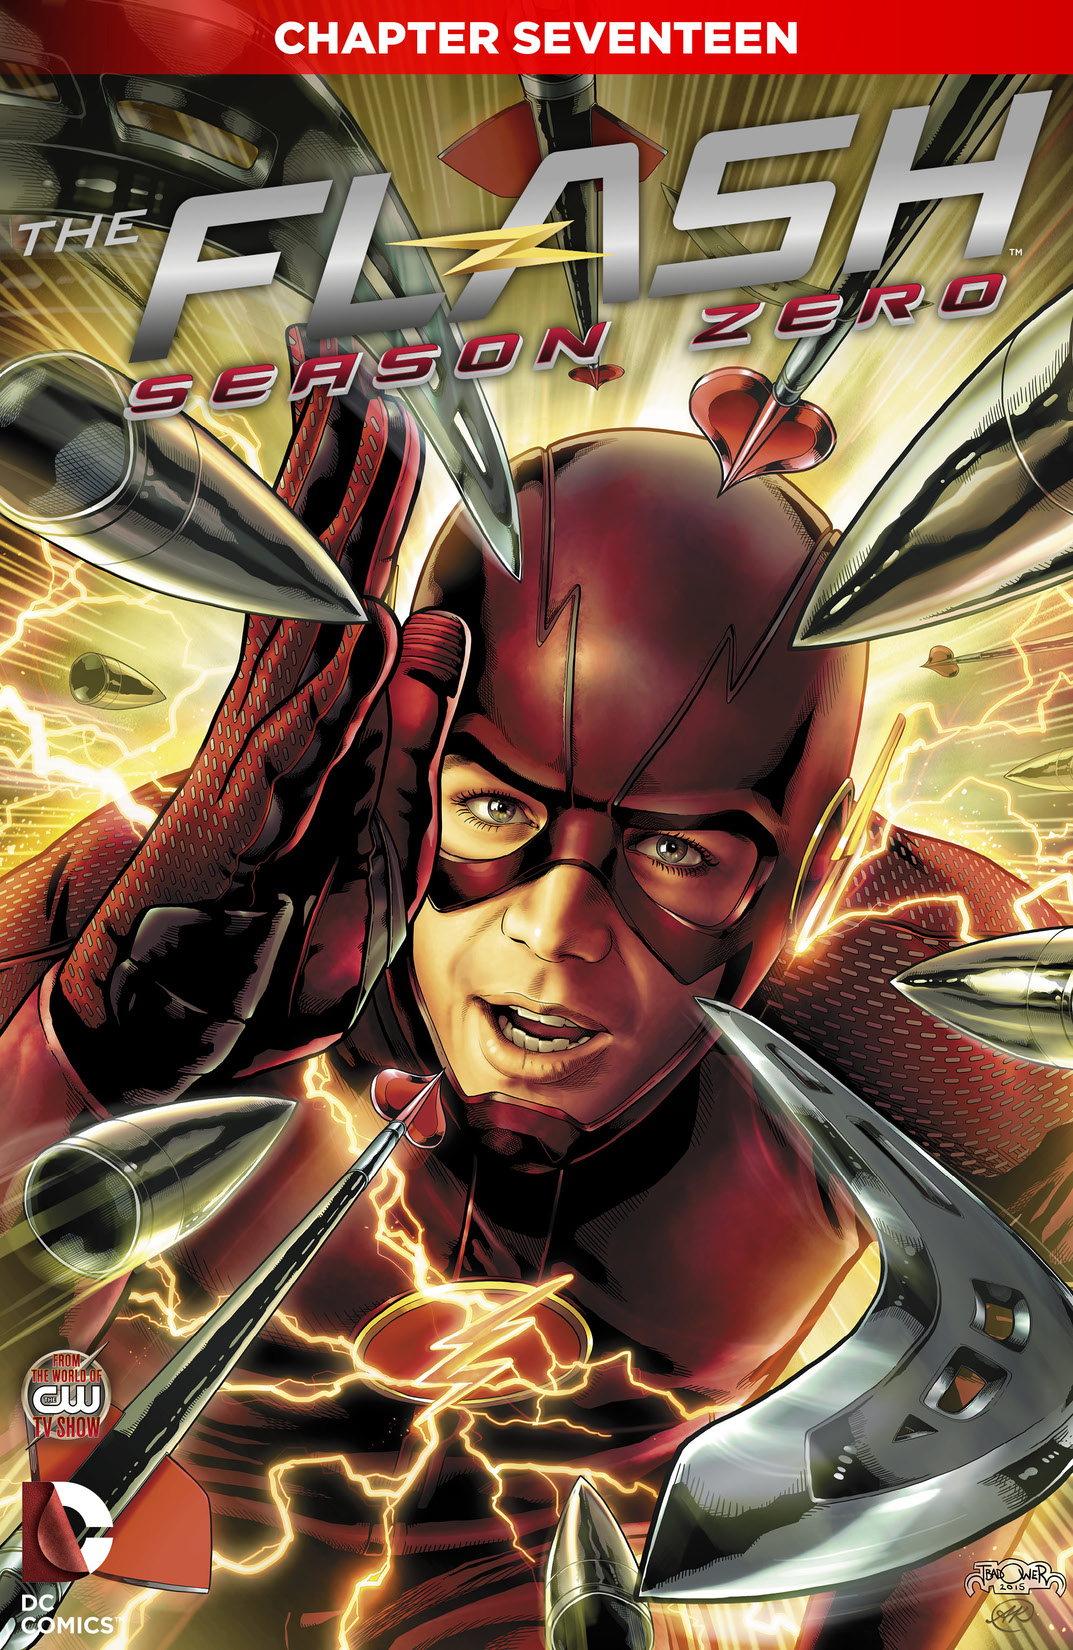 The Flash: Season Zero #17 preview images